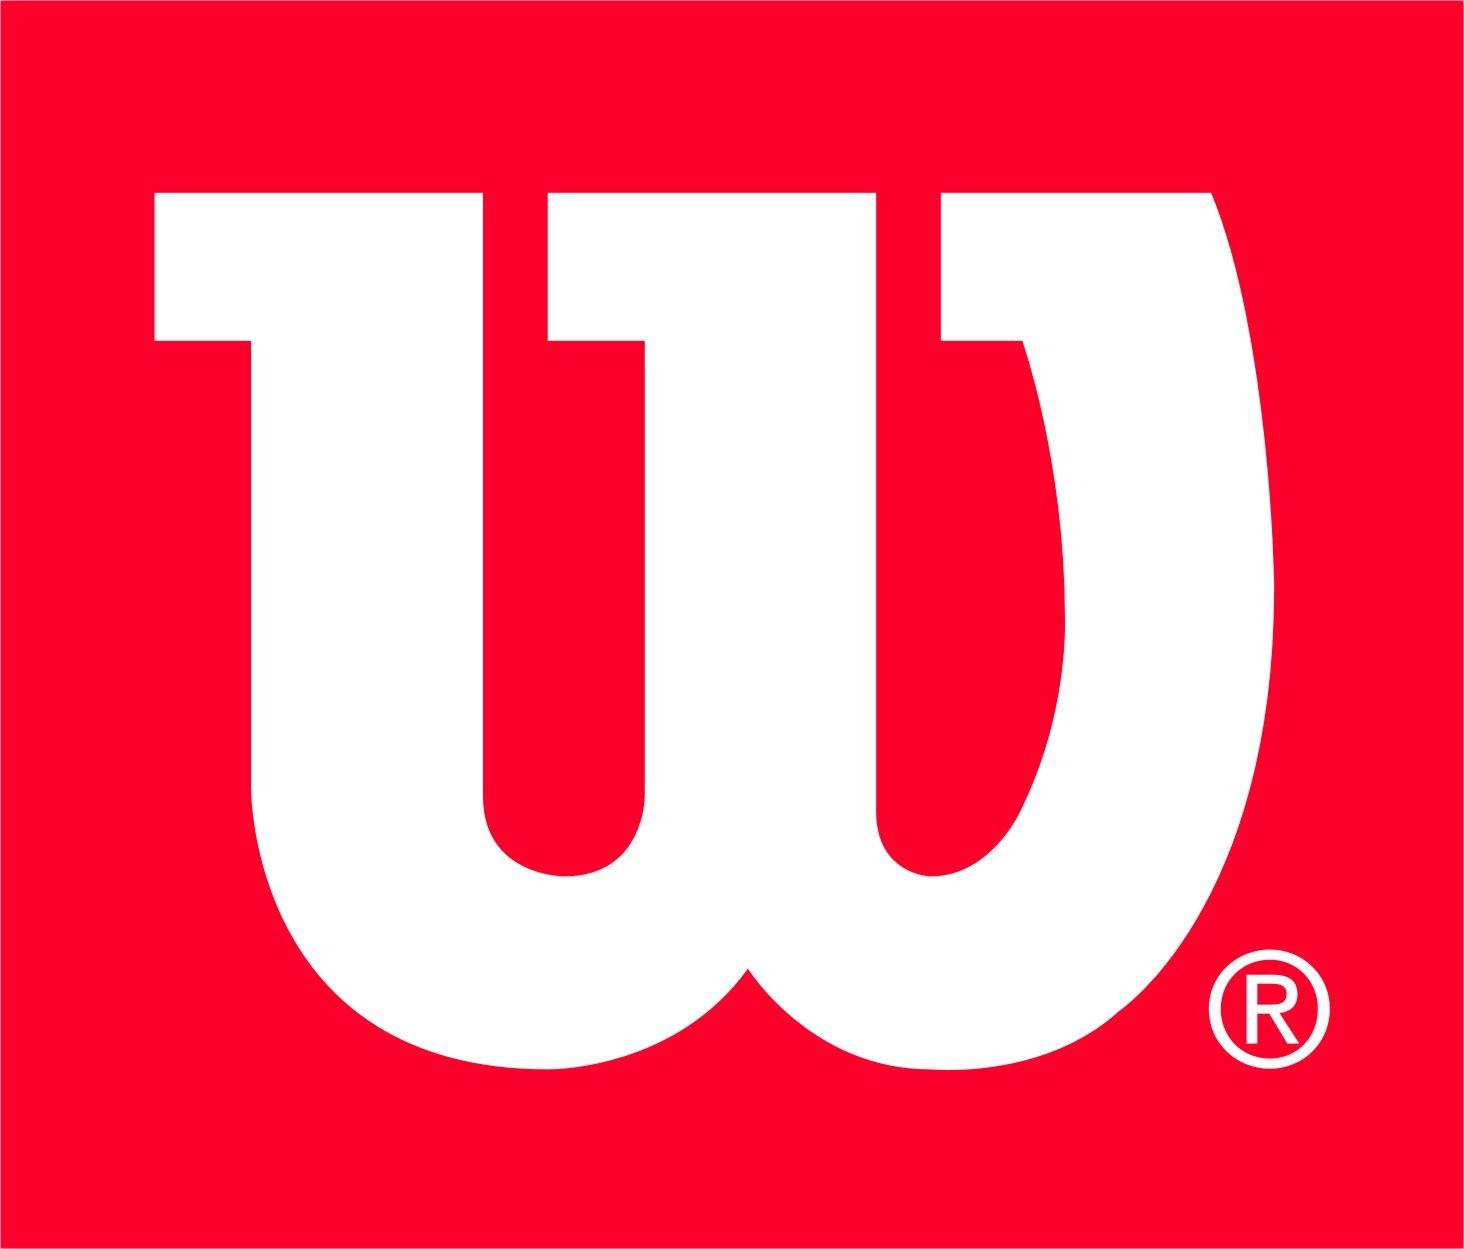 Wilson Logo - File:Wilson logo.jpg - Wikimedia Commons